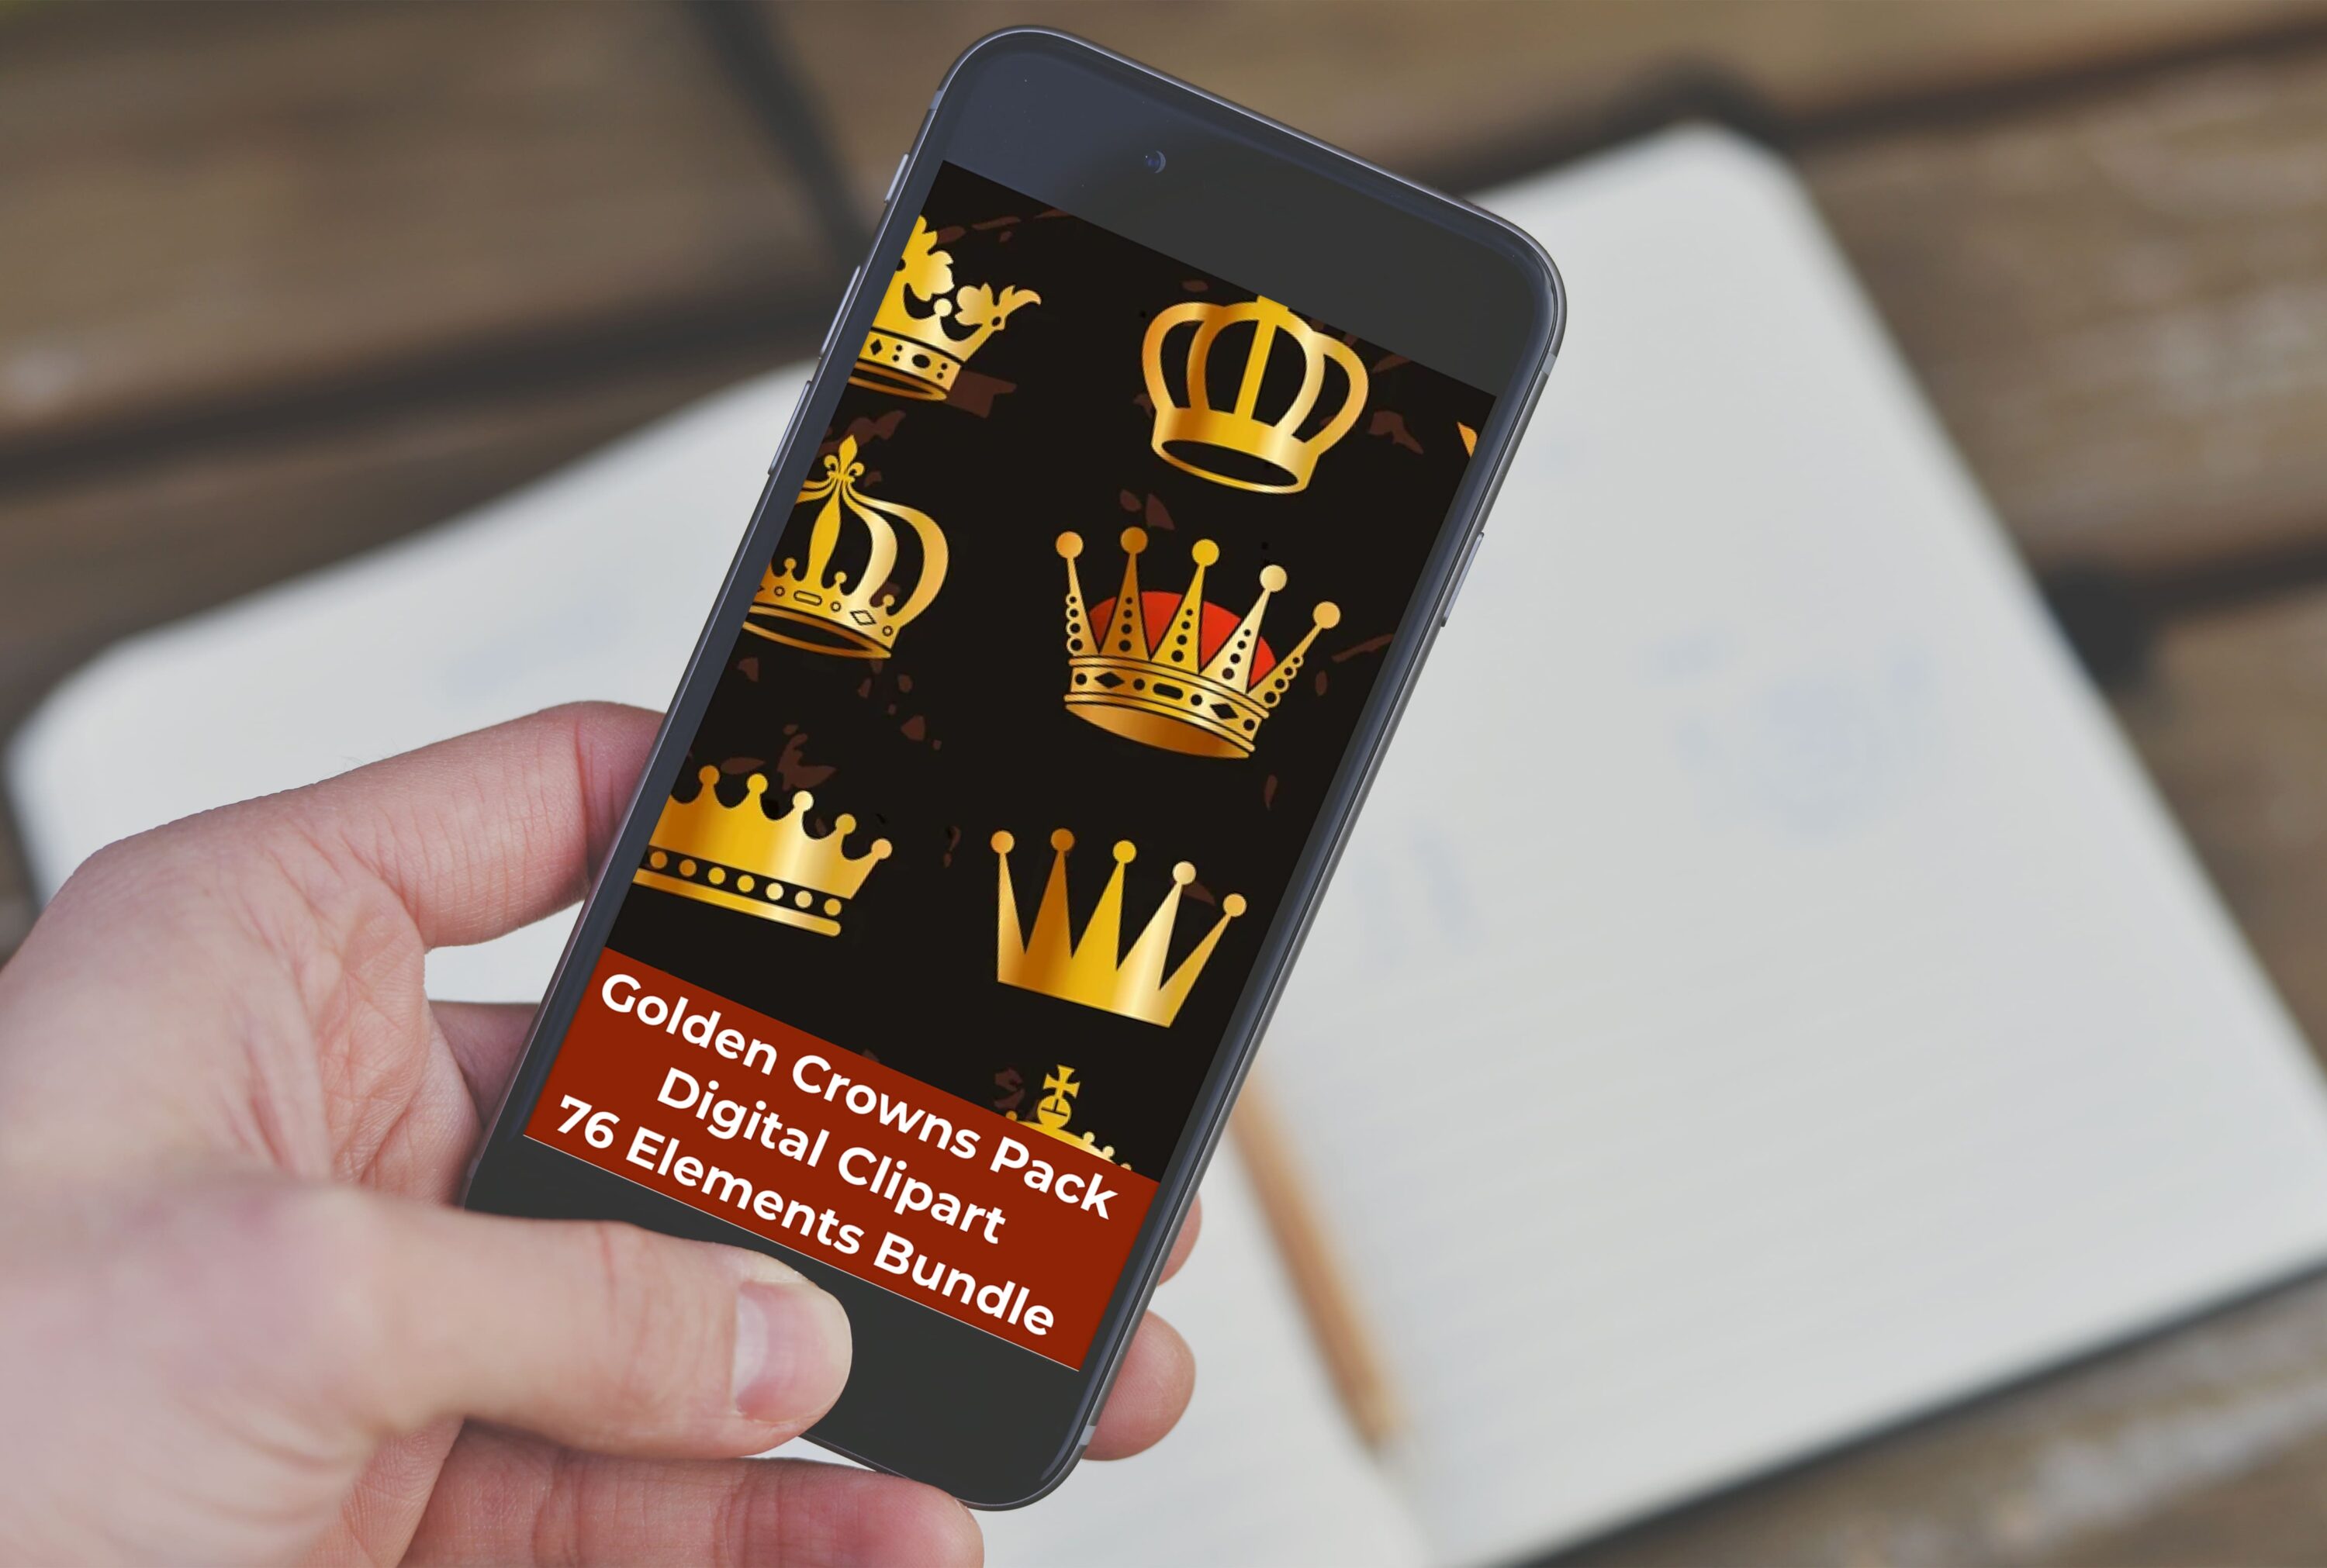 Mobile option of the Golden Crowns Pack Digital Clipart, 76 Elements Bundle.